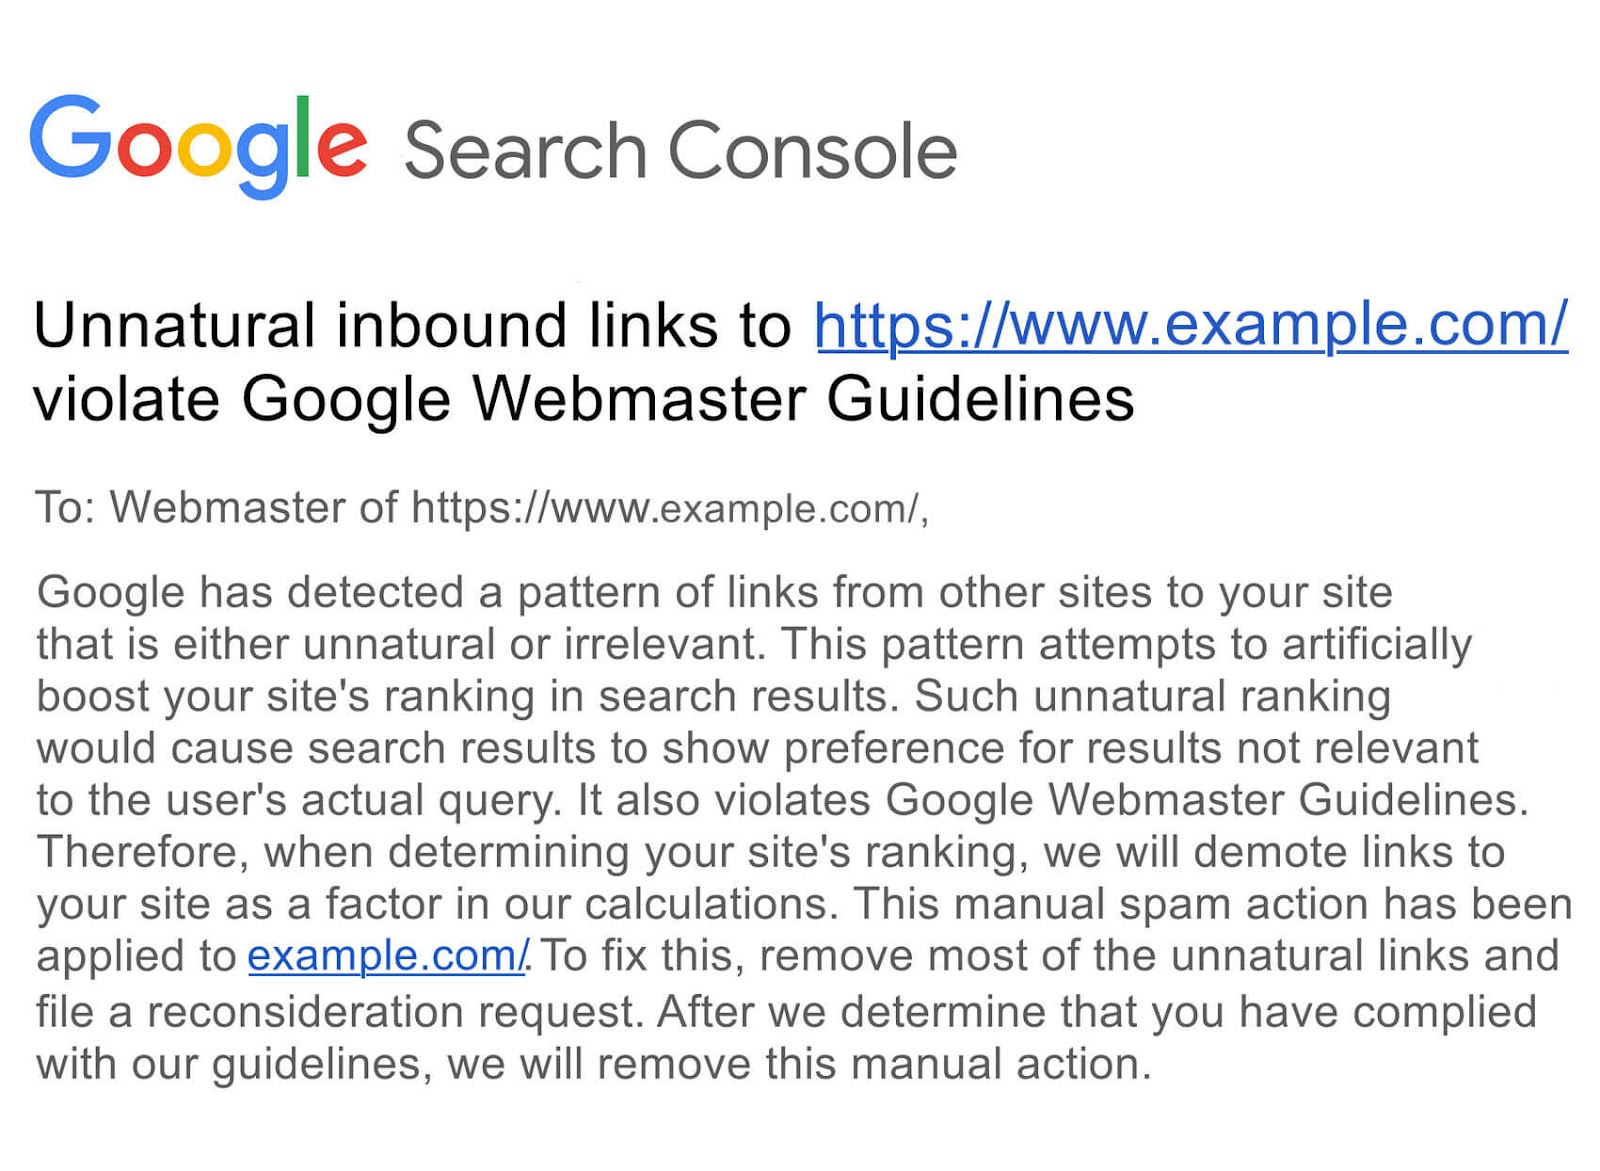 Google's notification on unnatural inbound links that violate Google Webmaster Guidelines